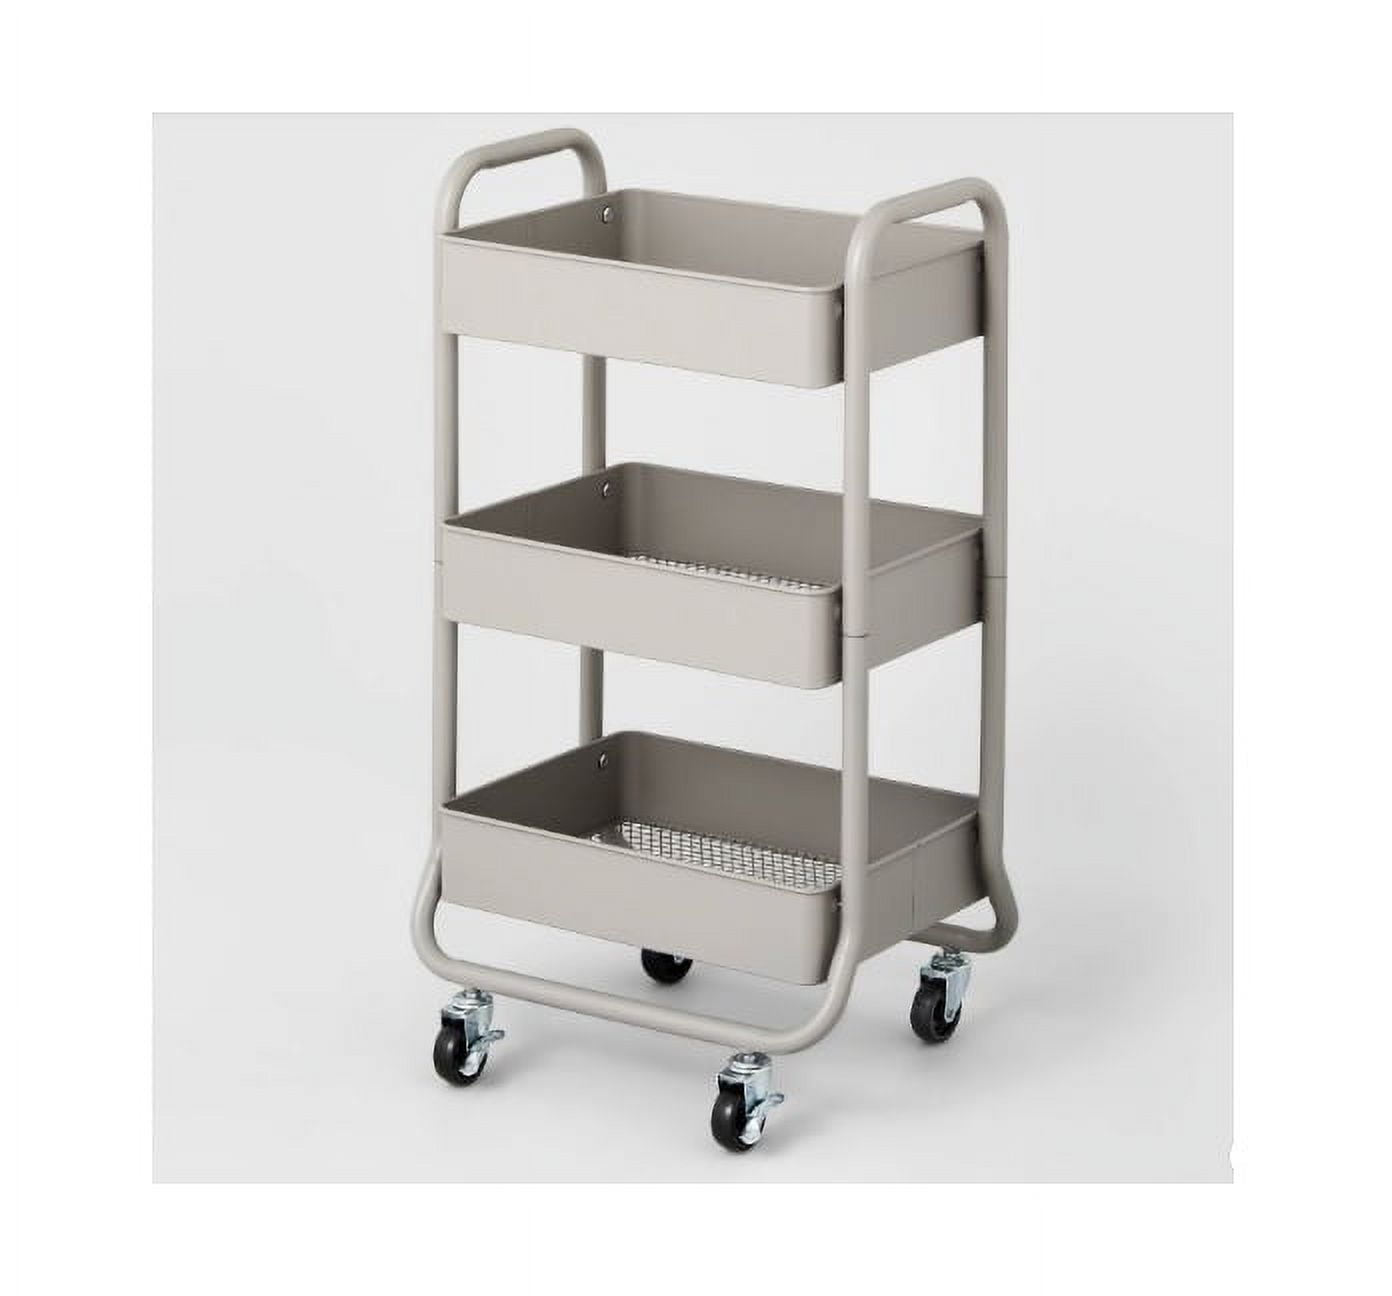 3 Tier Utility Cart White - Brightroom™